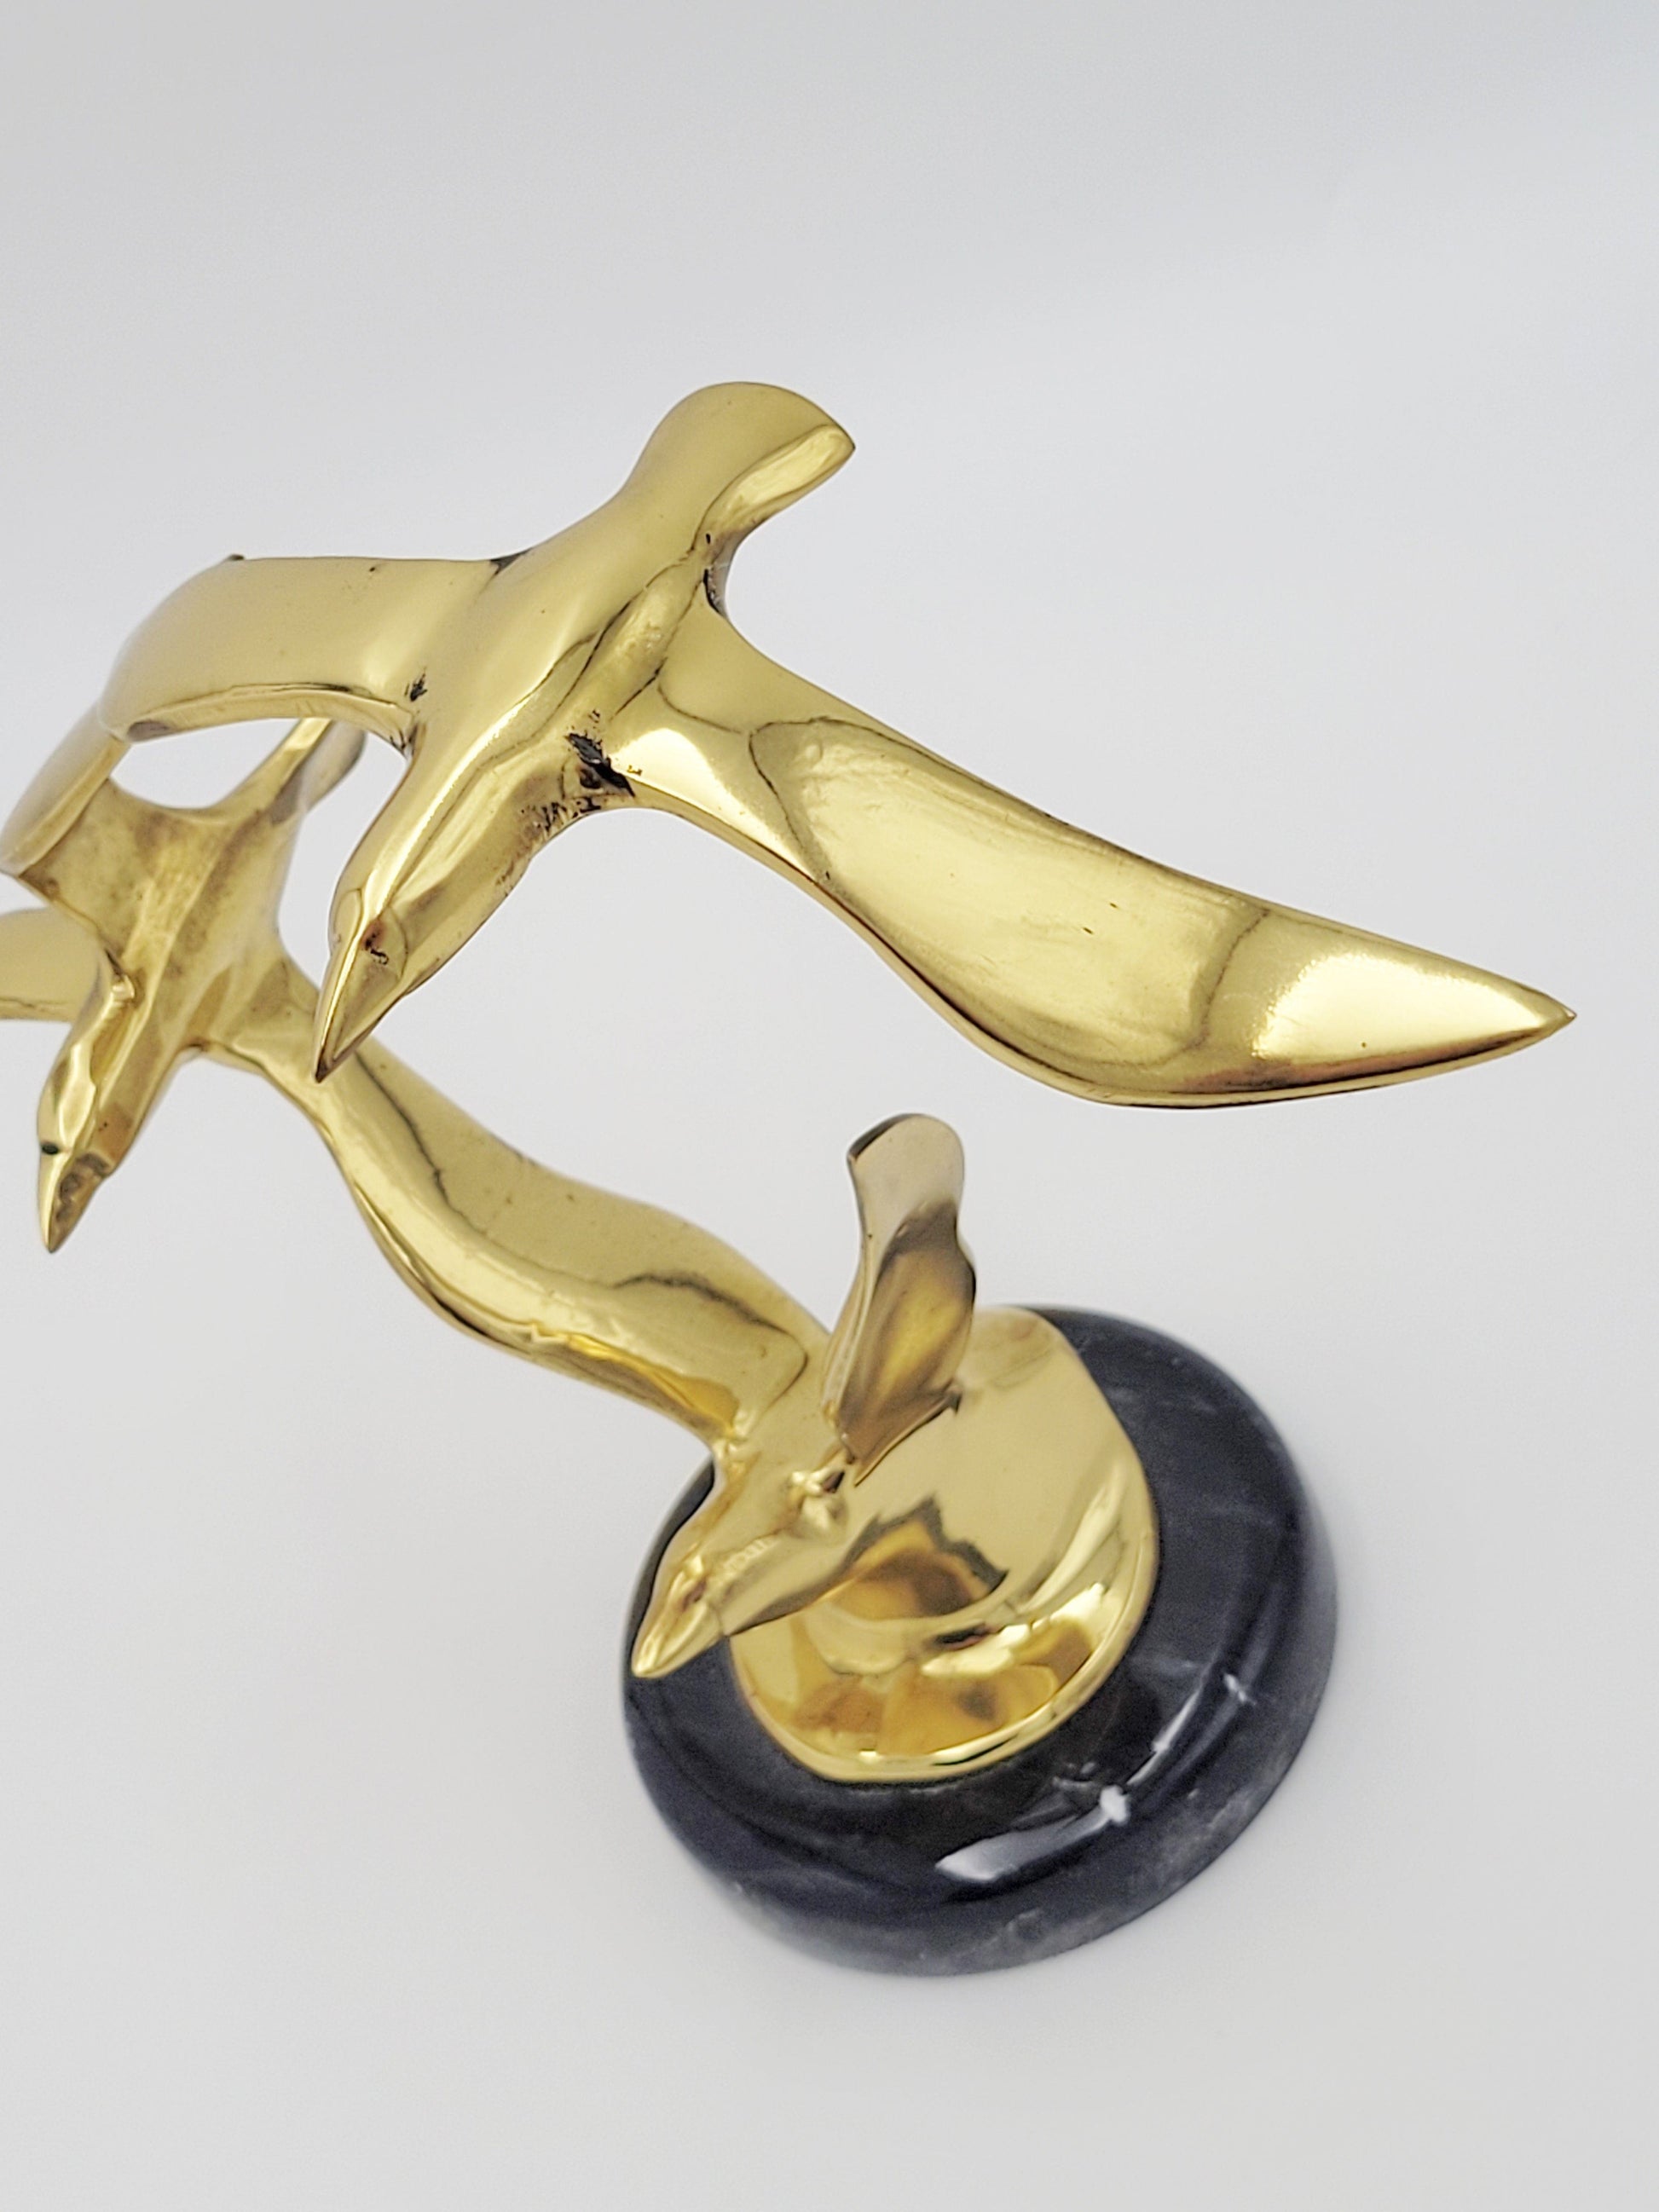 Jere Style Sculpture Sculpture Vintage Jere Style Shiny Brass Modernist Birds in Flight Sculpture Marble Base